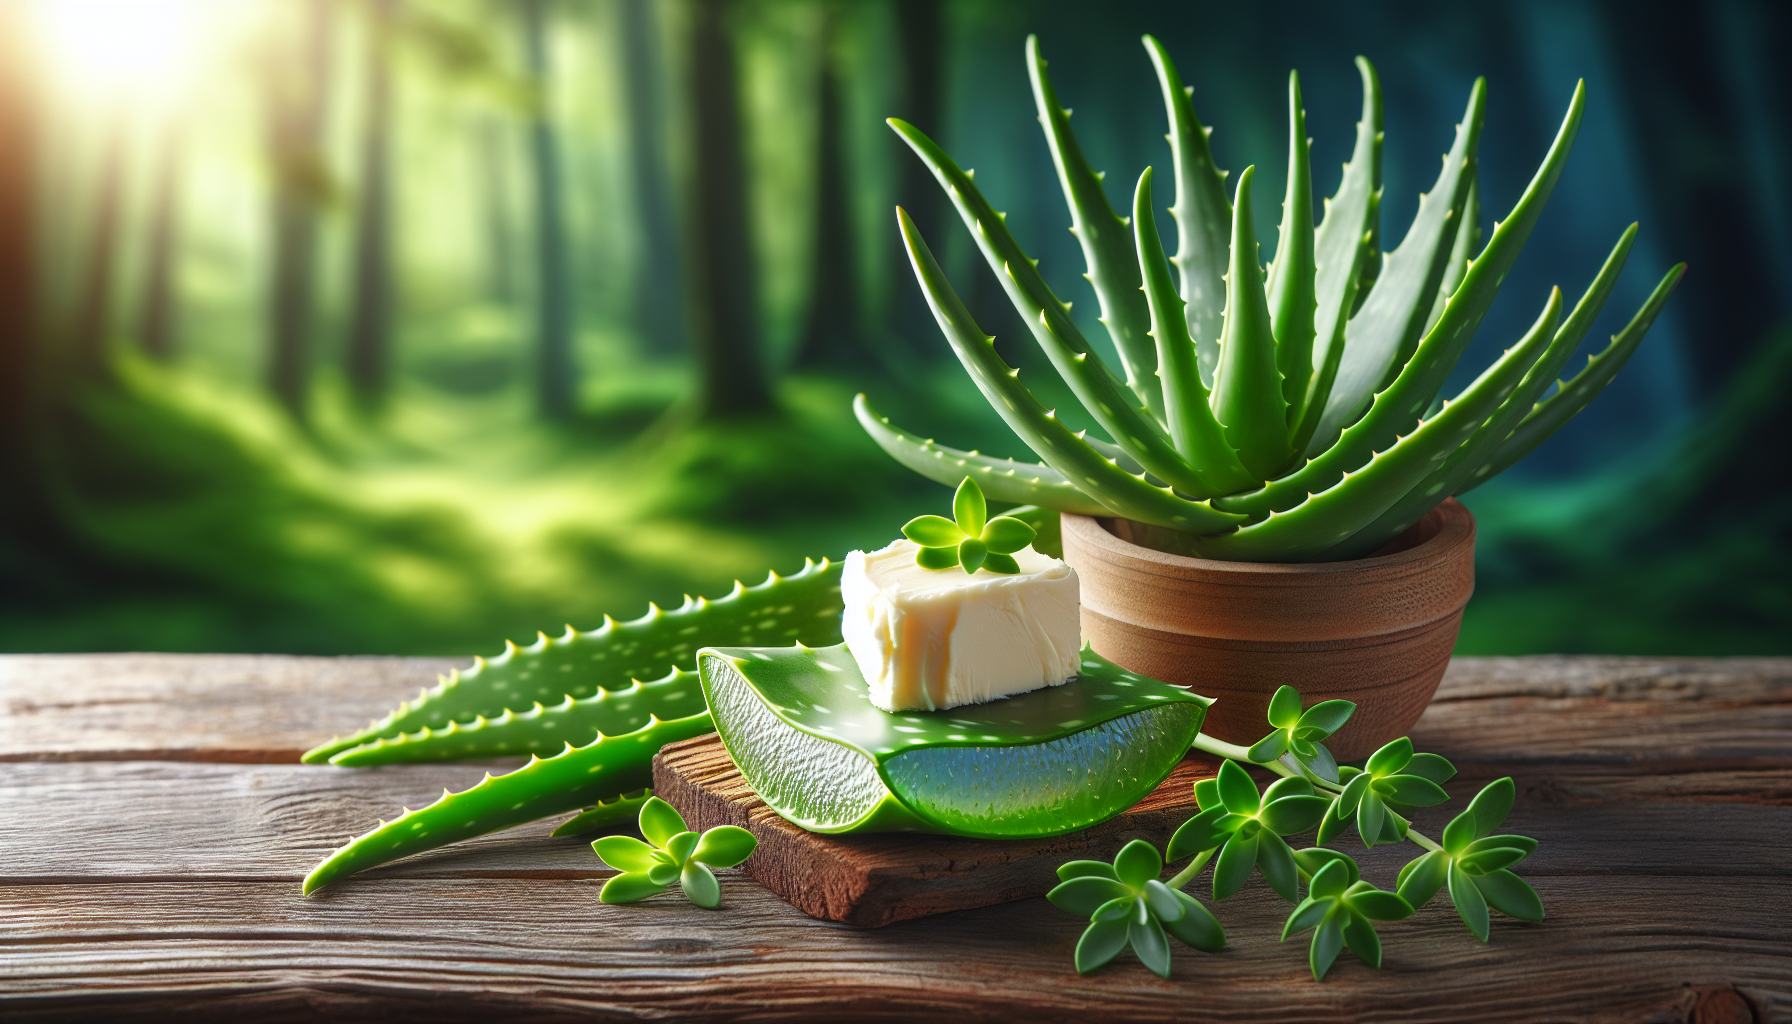 Aloe vera, shea butter, and sensitive skin